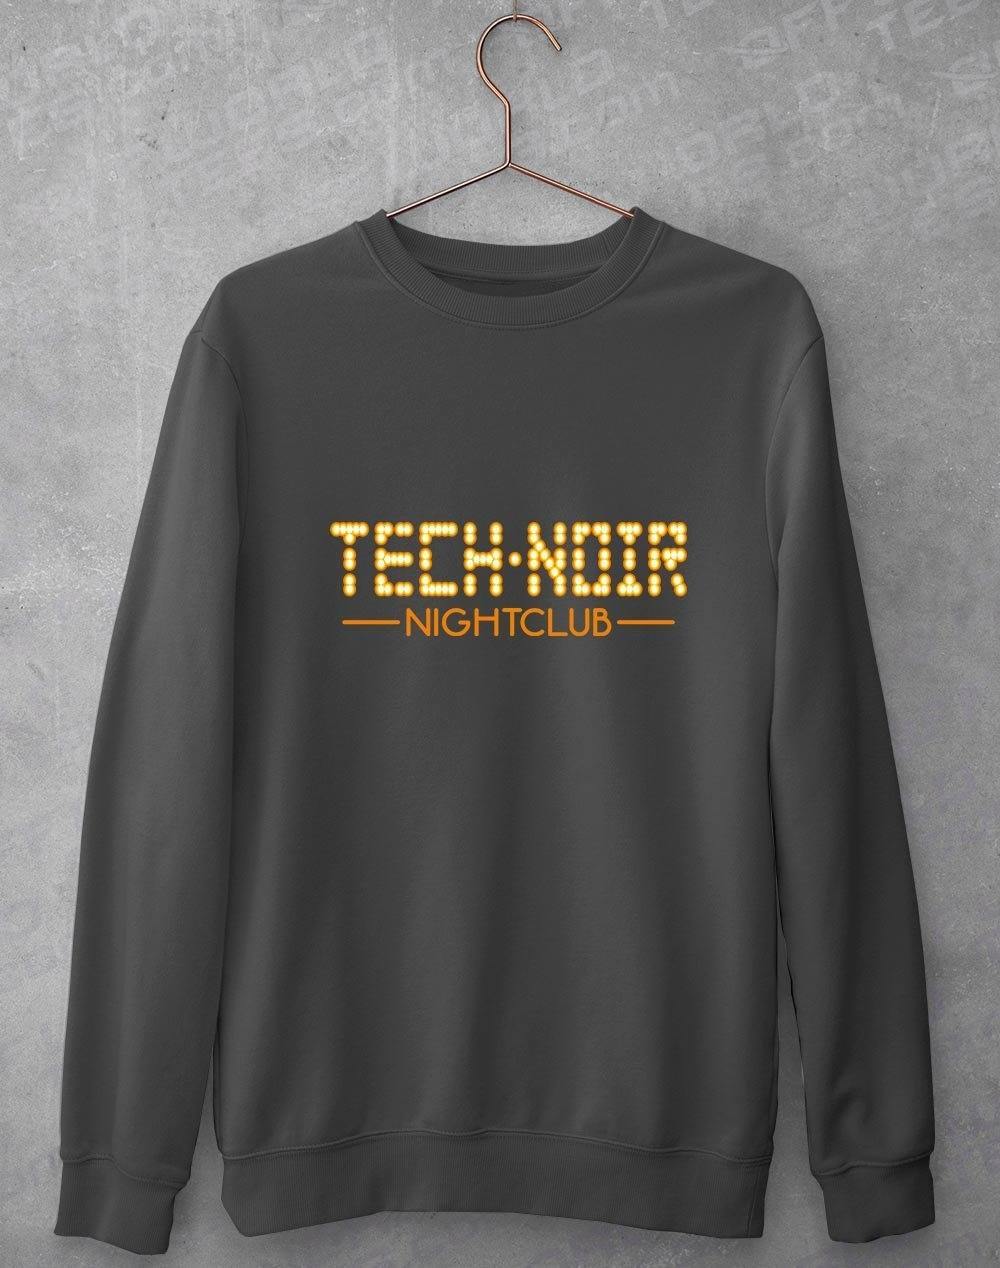 Club Tech Noir Sweatshirt S / Charcoal  - Off World Tees